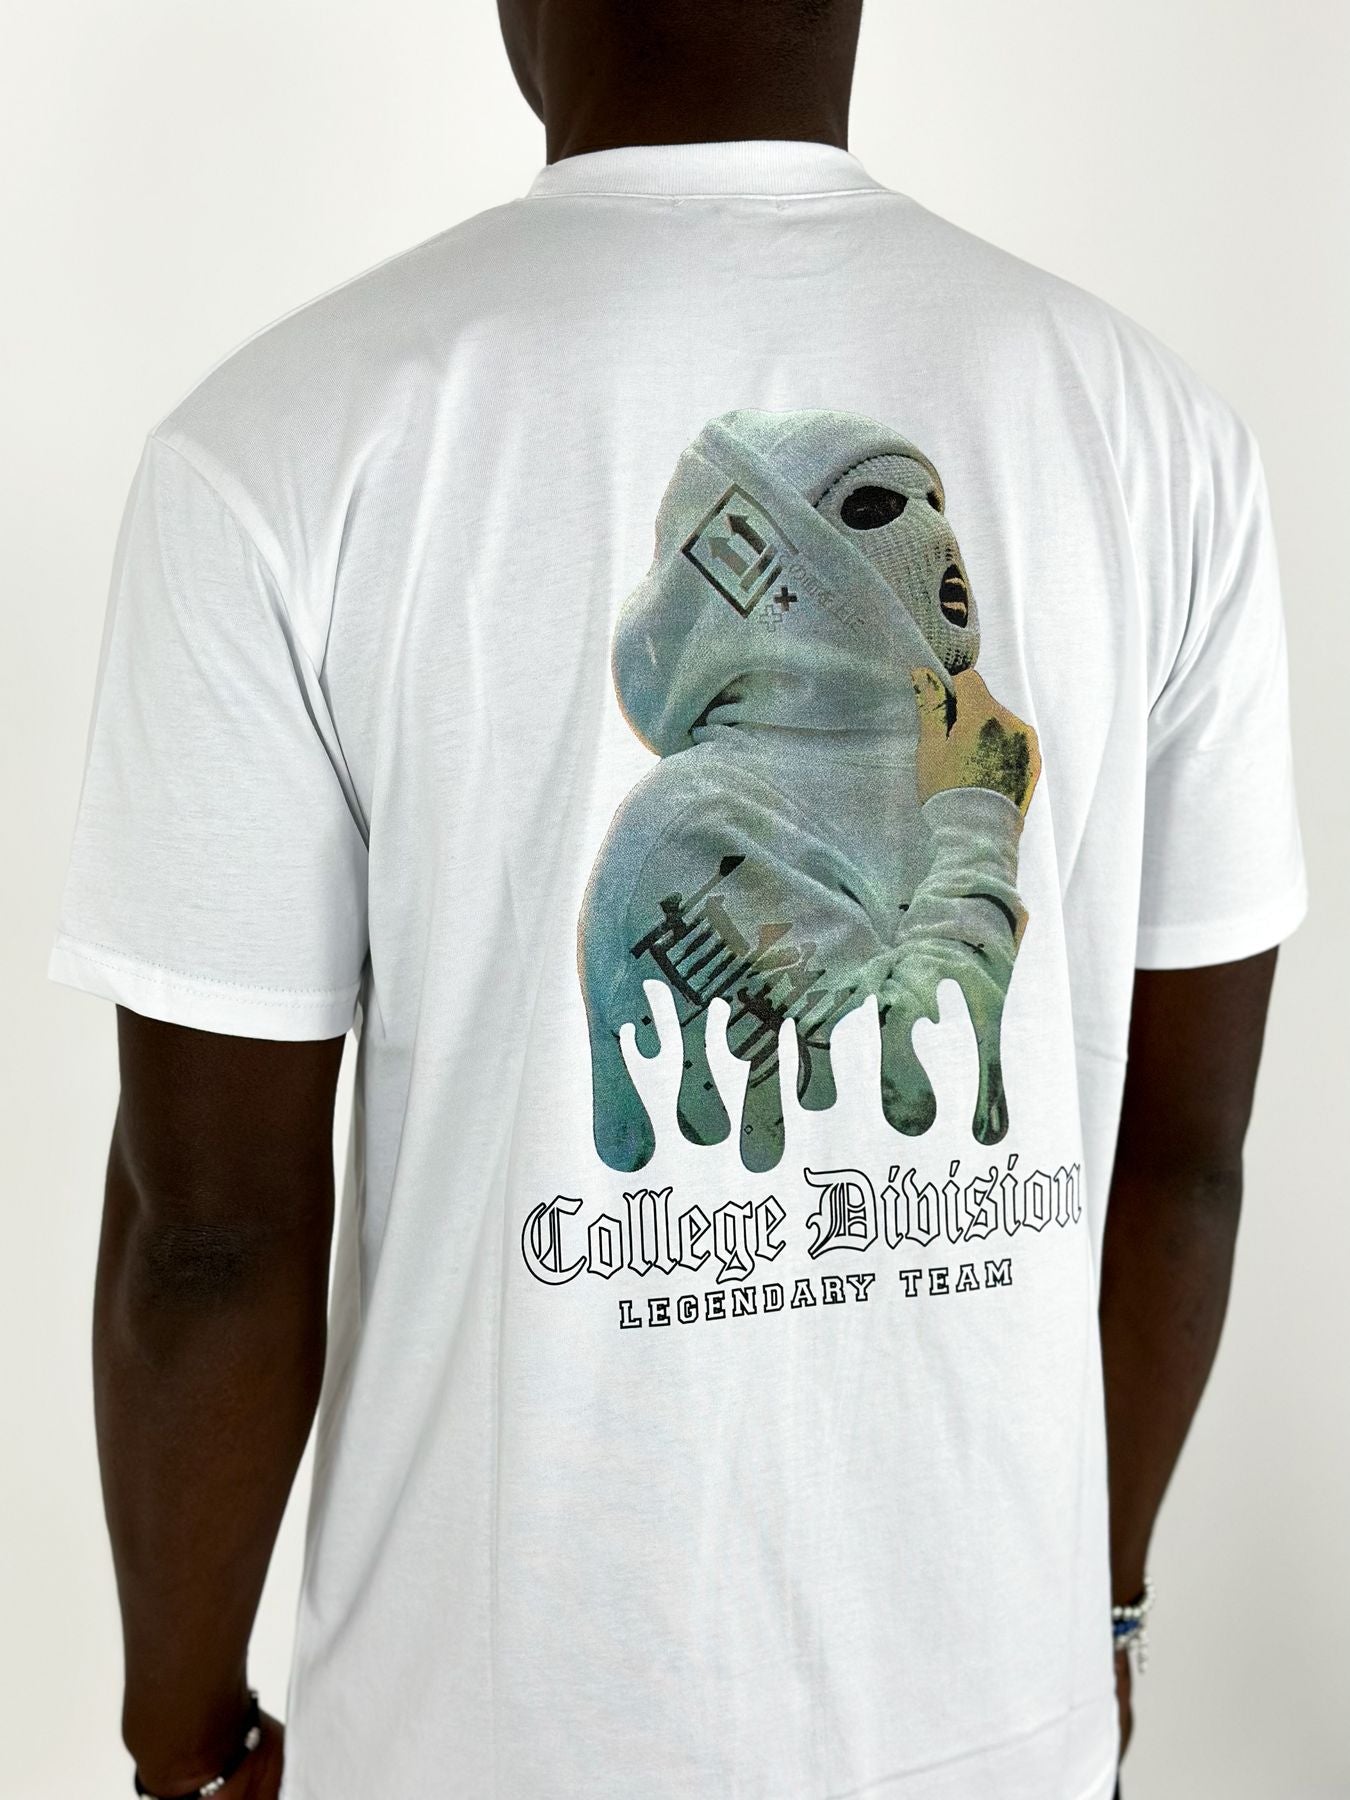 T-Shirt College Division - Estilo De Vida